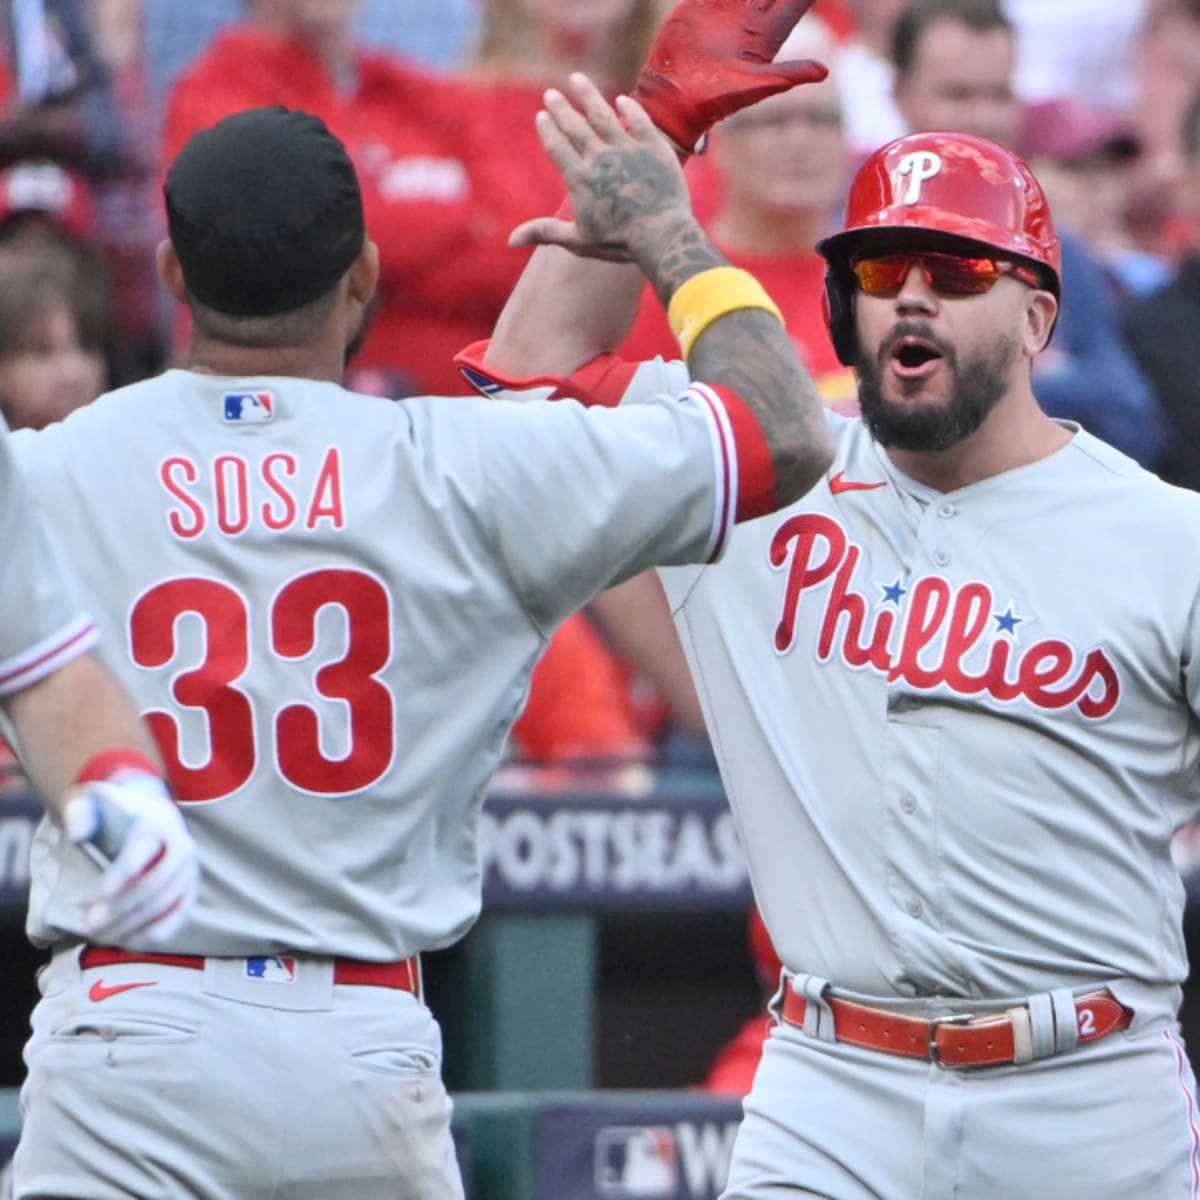 MLB Saturday three-team mega parlay (+1203): Phillies making push